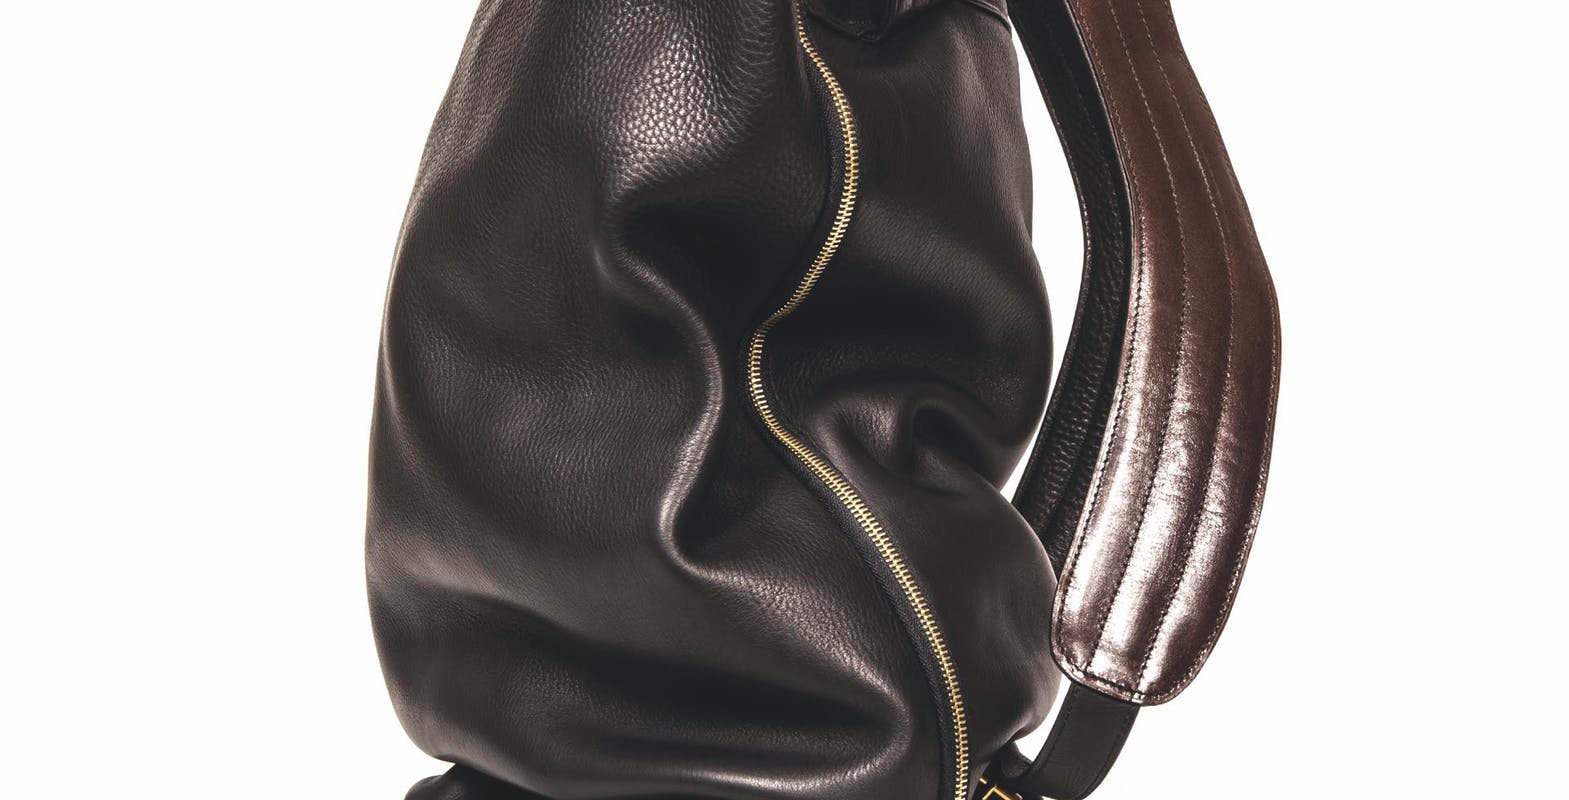 clothing apparel bag handbag accessories accessory